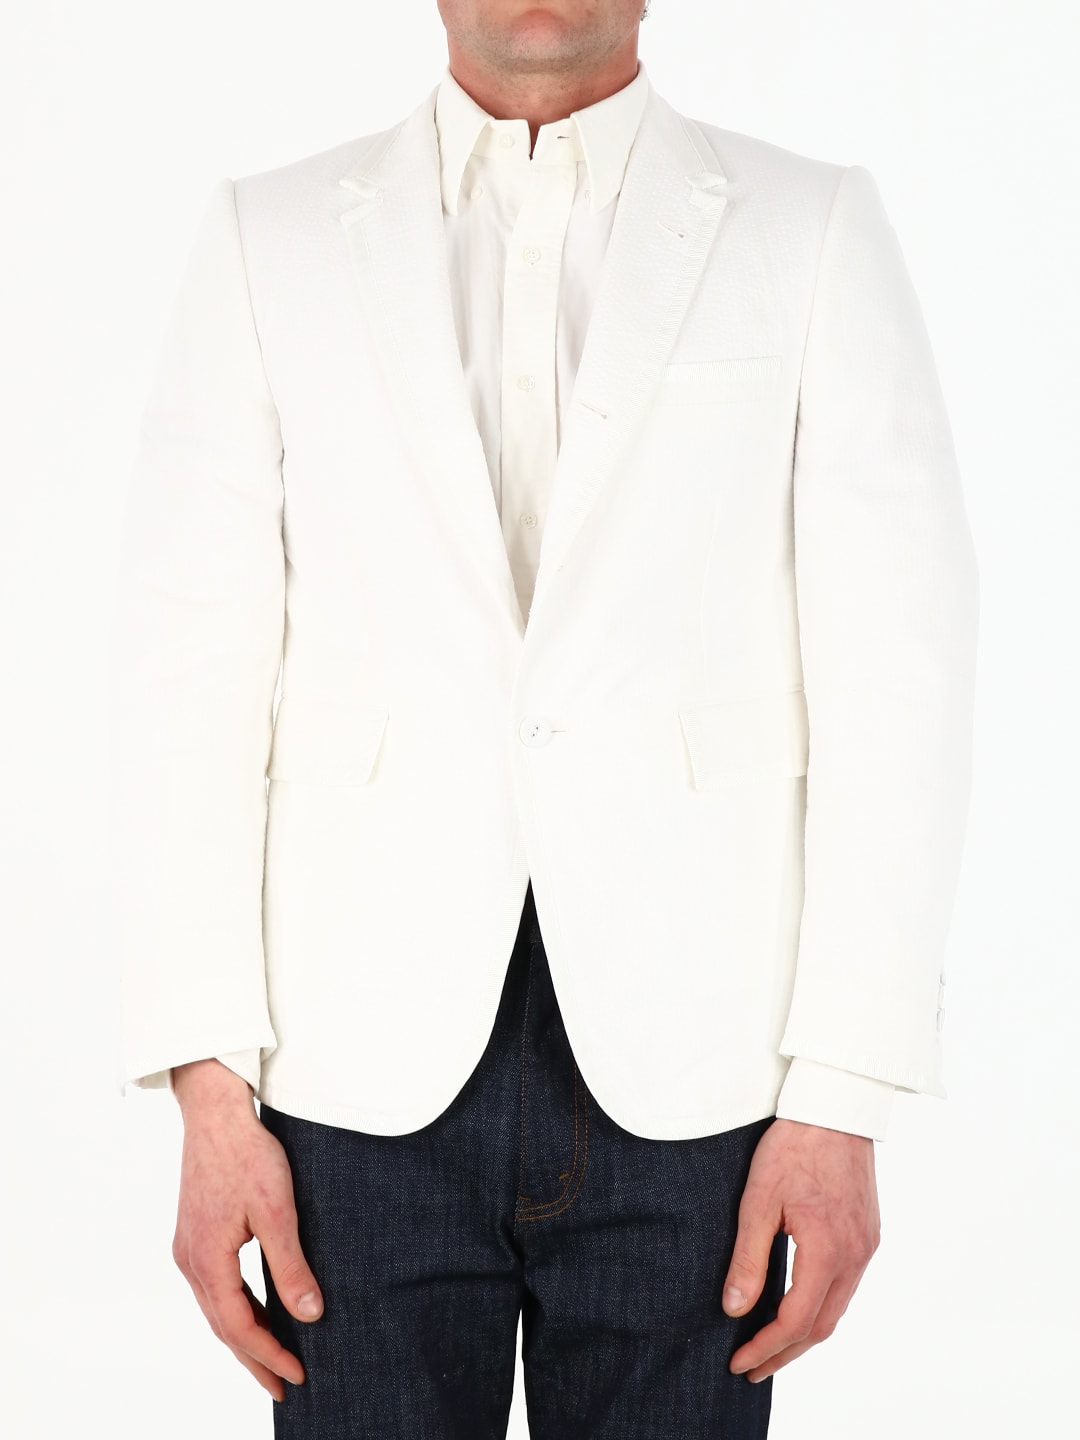 Thom Browne White Cotton Jacket